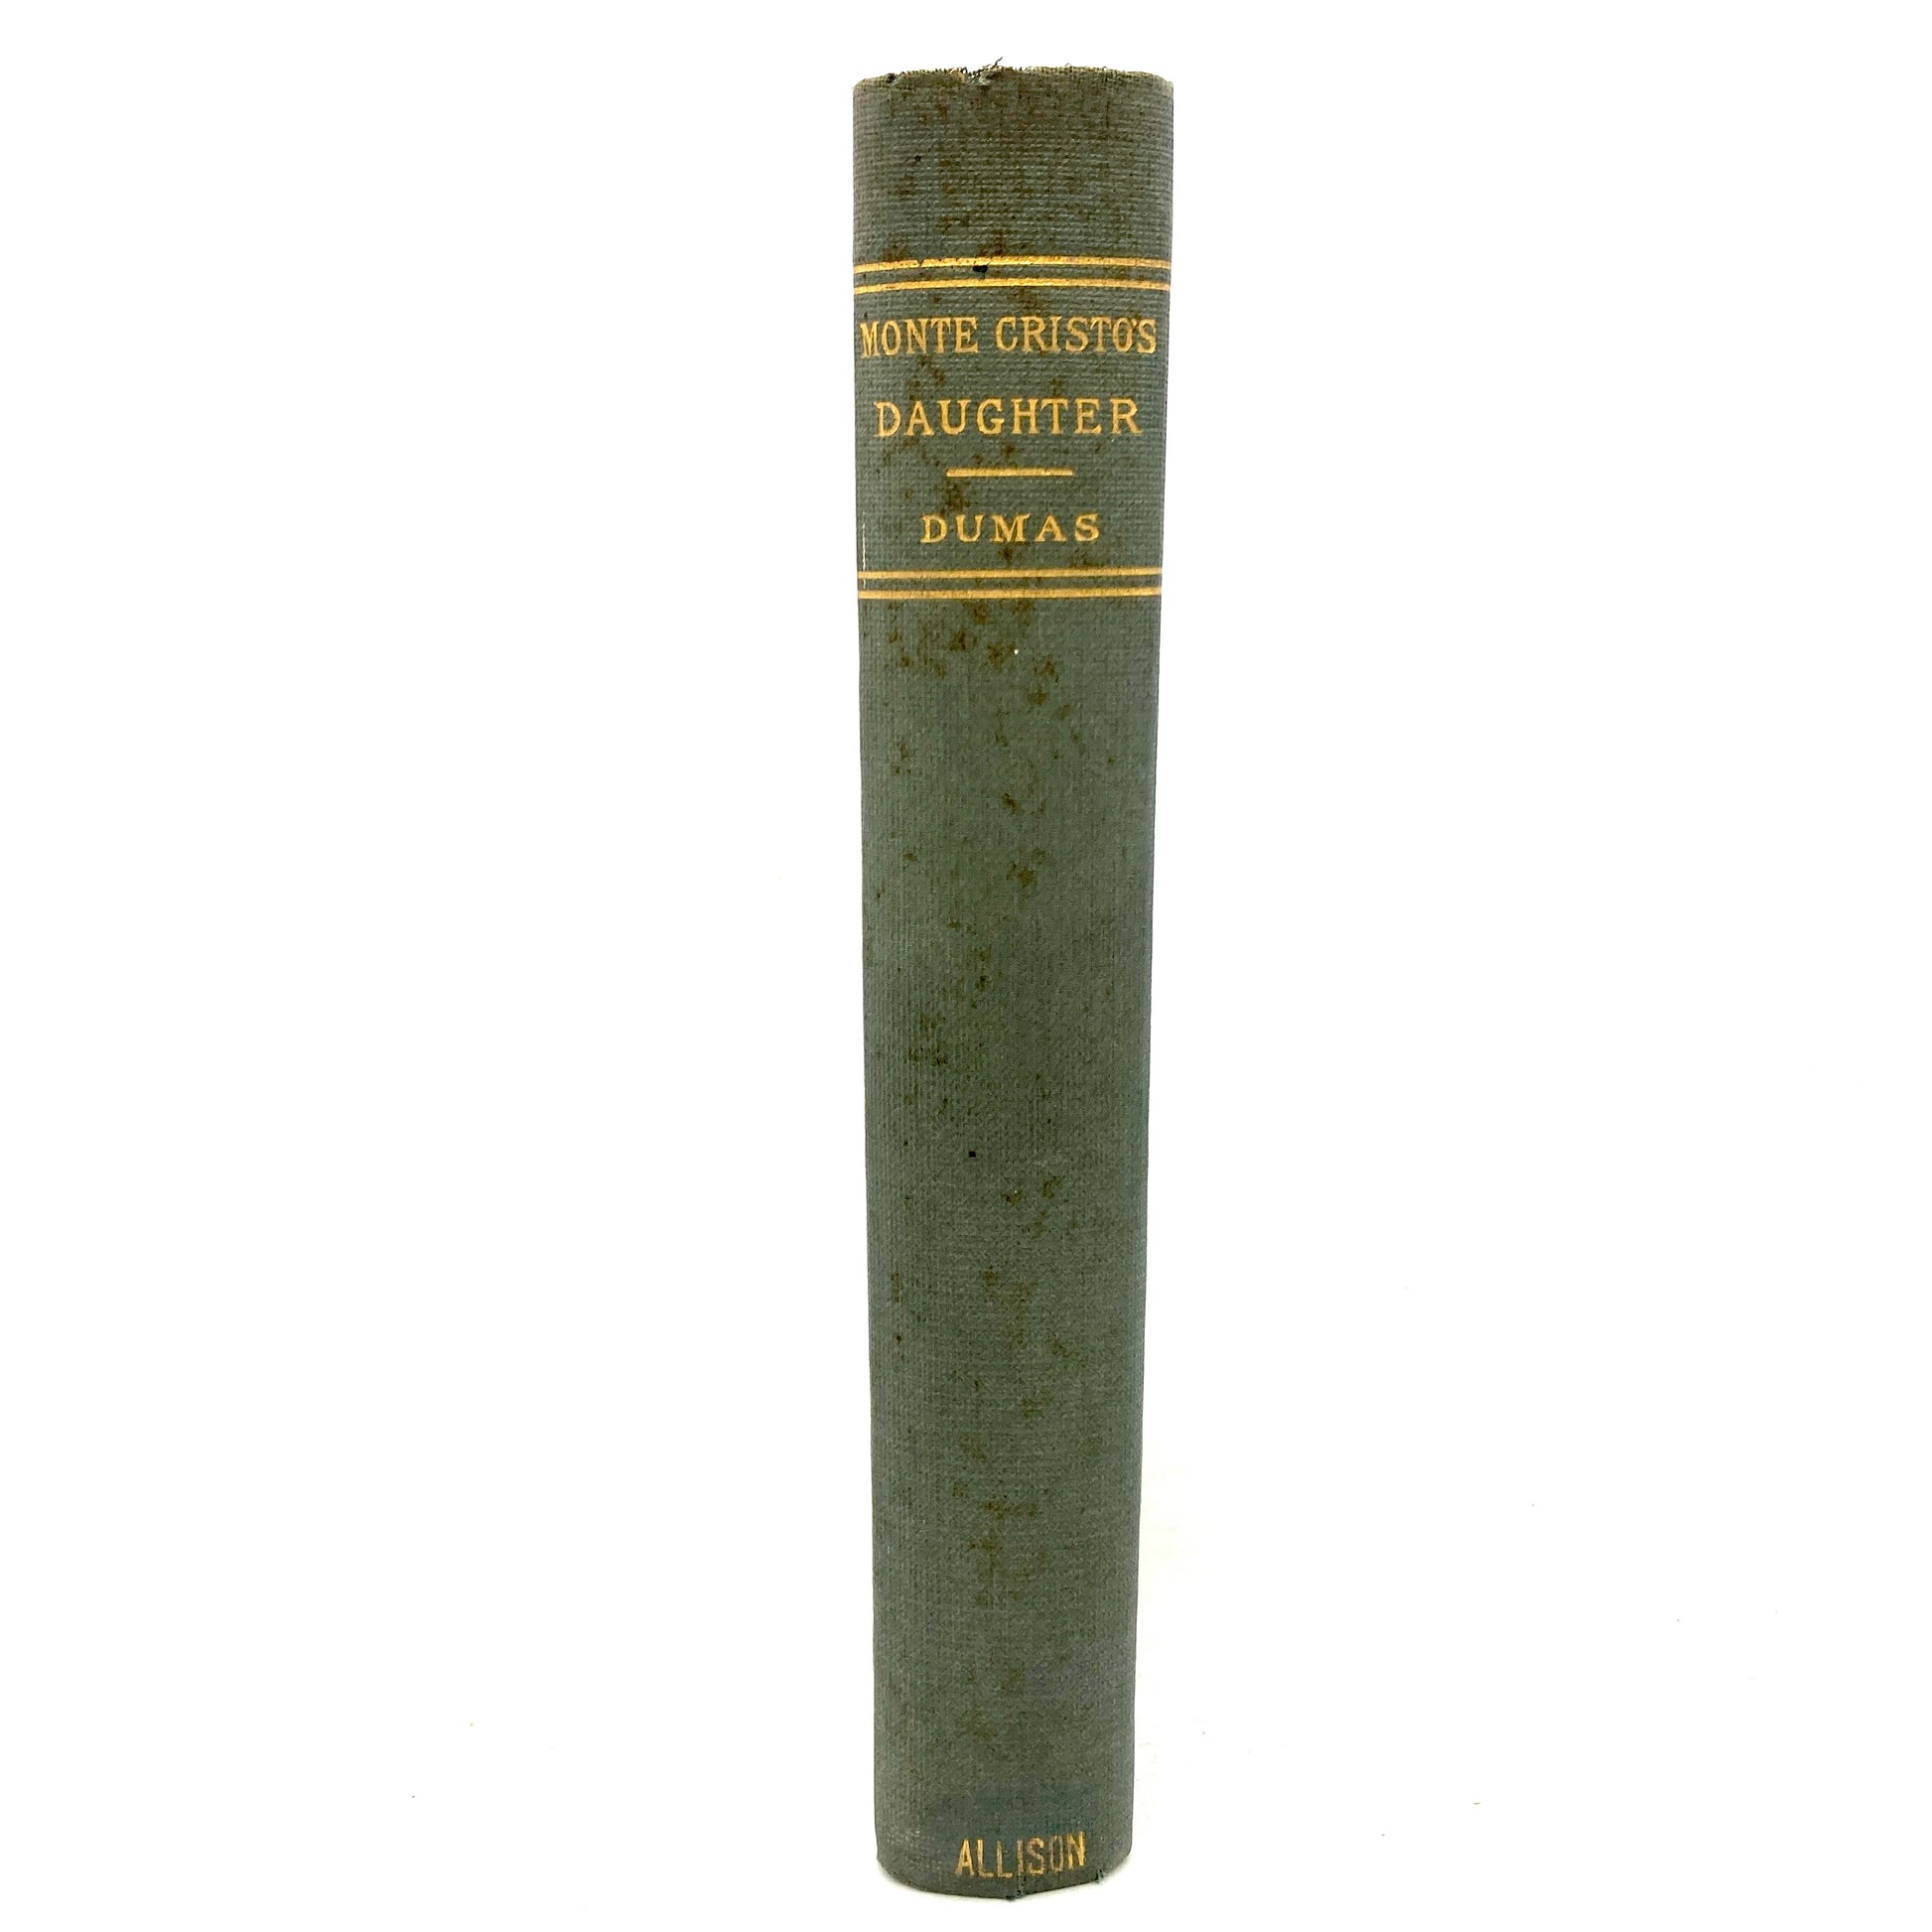 DUMAS, Alexandre "Monte Cristo's Daughter" [Wm. L. Allison, c1884] - Buzz Bookstore